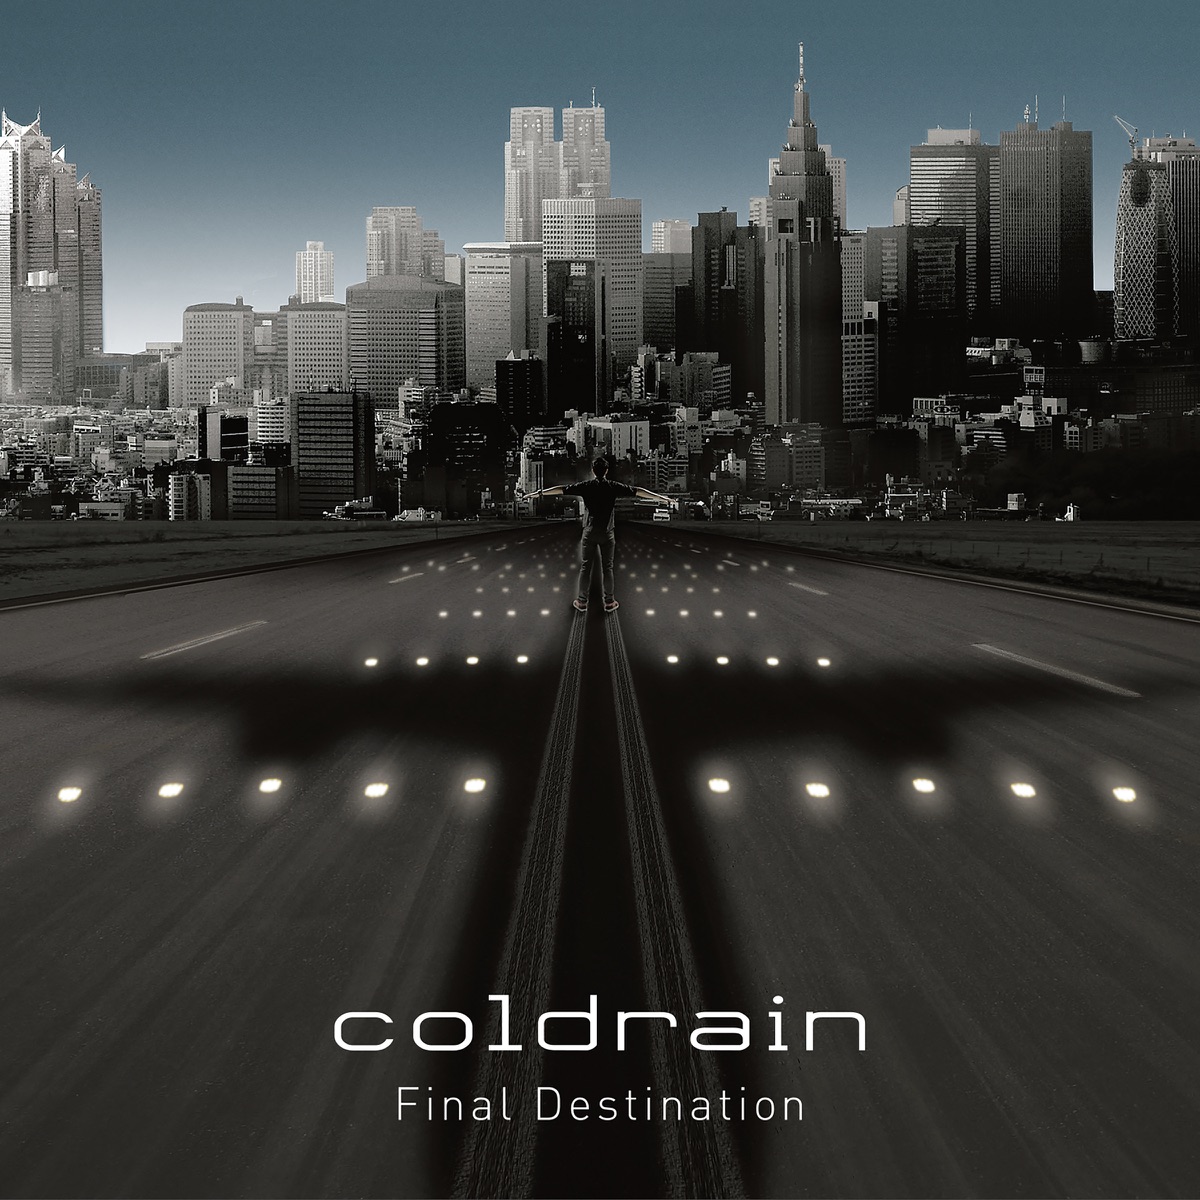 Final Destination - coldrainのアルバム - Apple Music